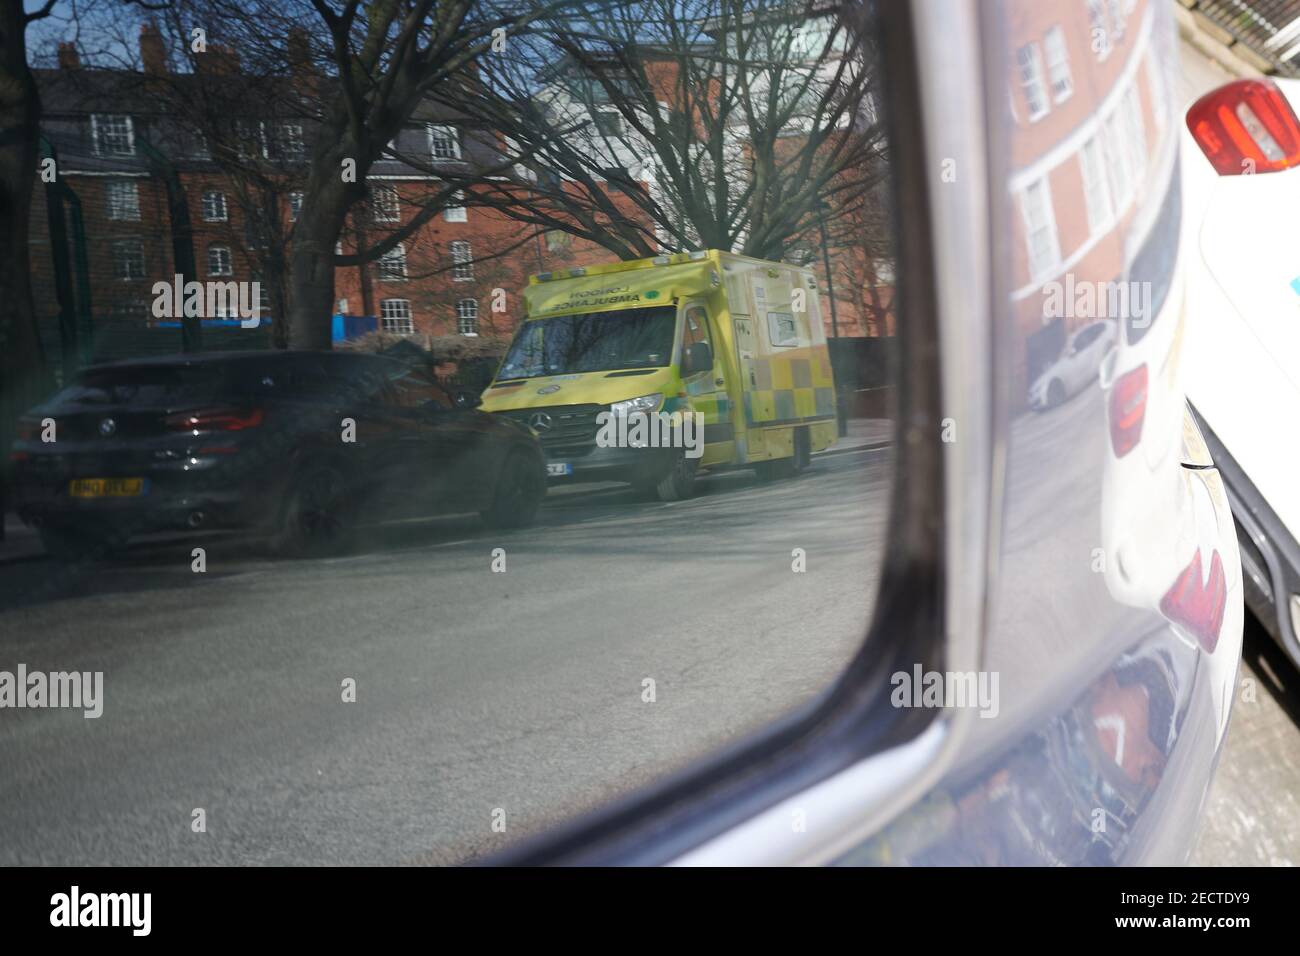 Londra UK - 13 Feb 2021: Ambulanza riflessa in una finestra auto. Foto Stock